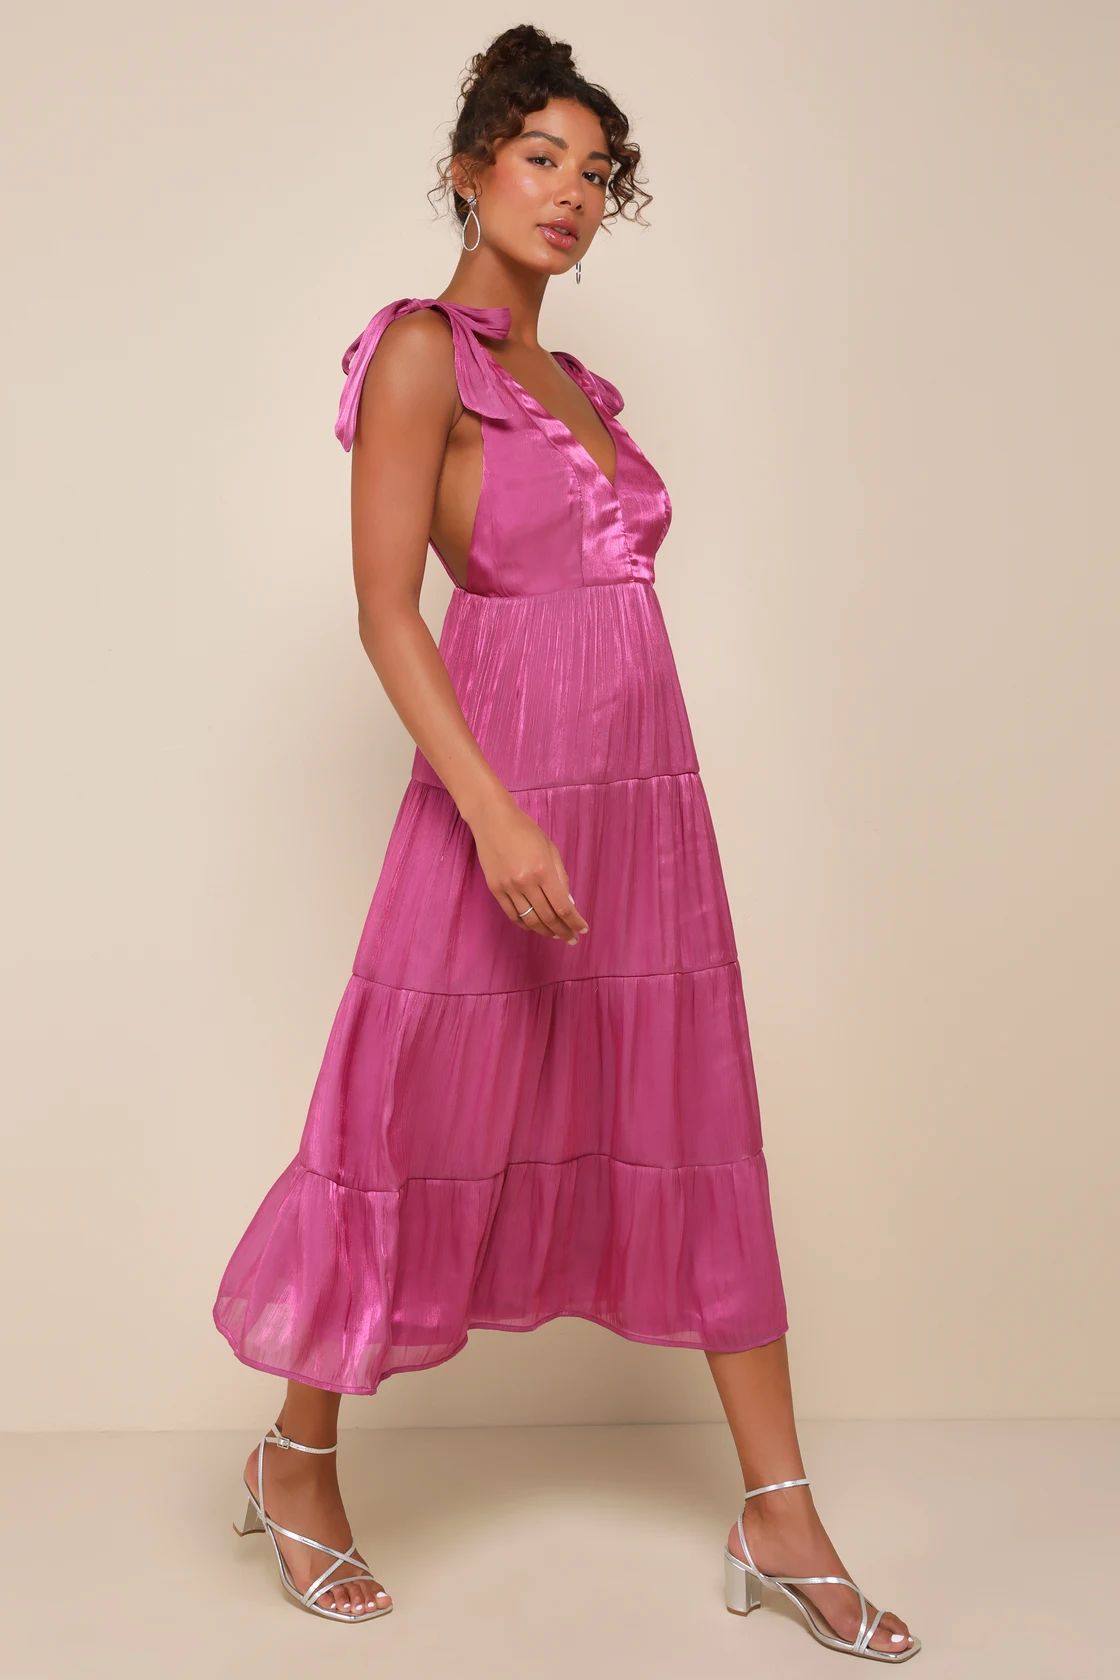 Exemplary Shine Magenta Organza Tie-Strap Tiered Midi Dress | Lulus